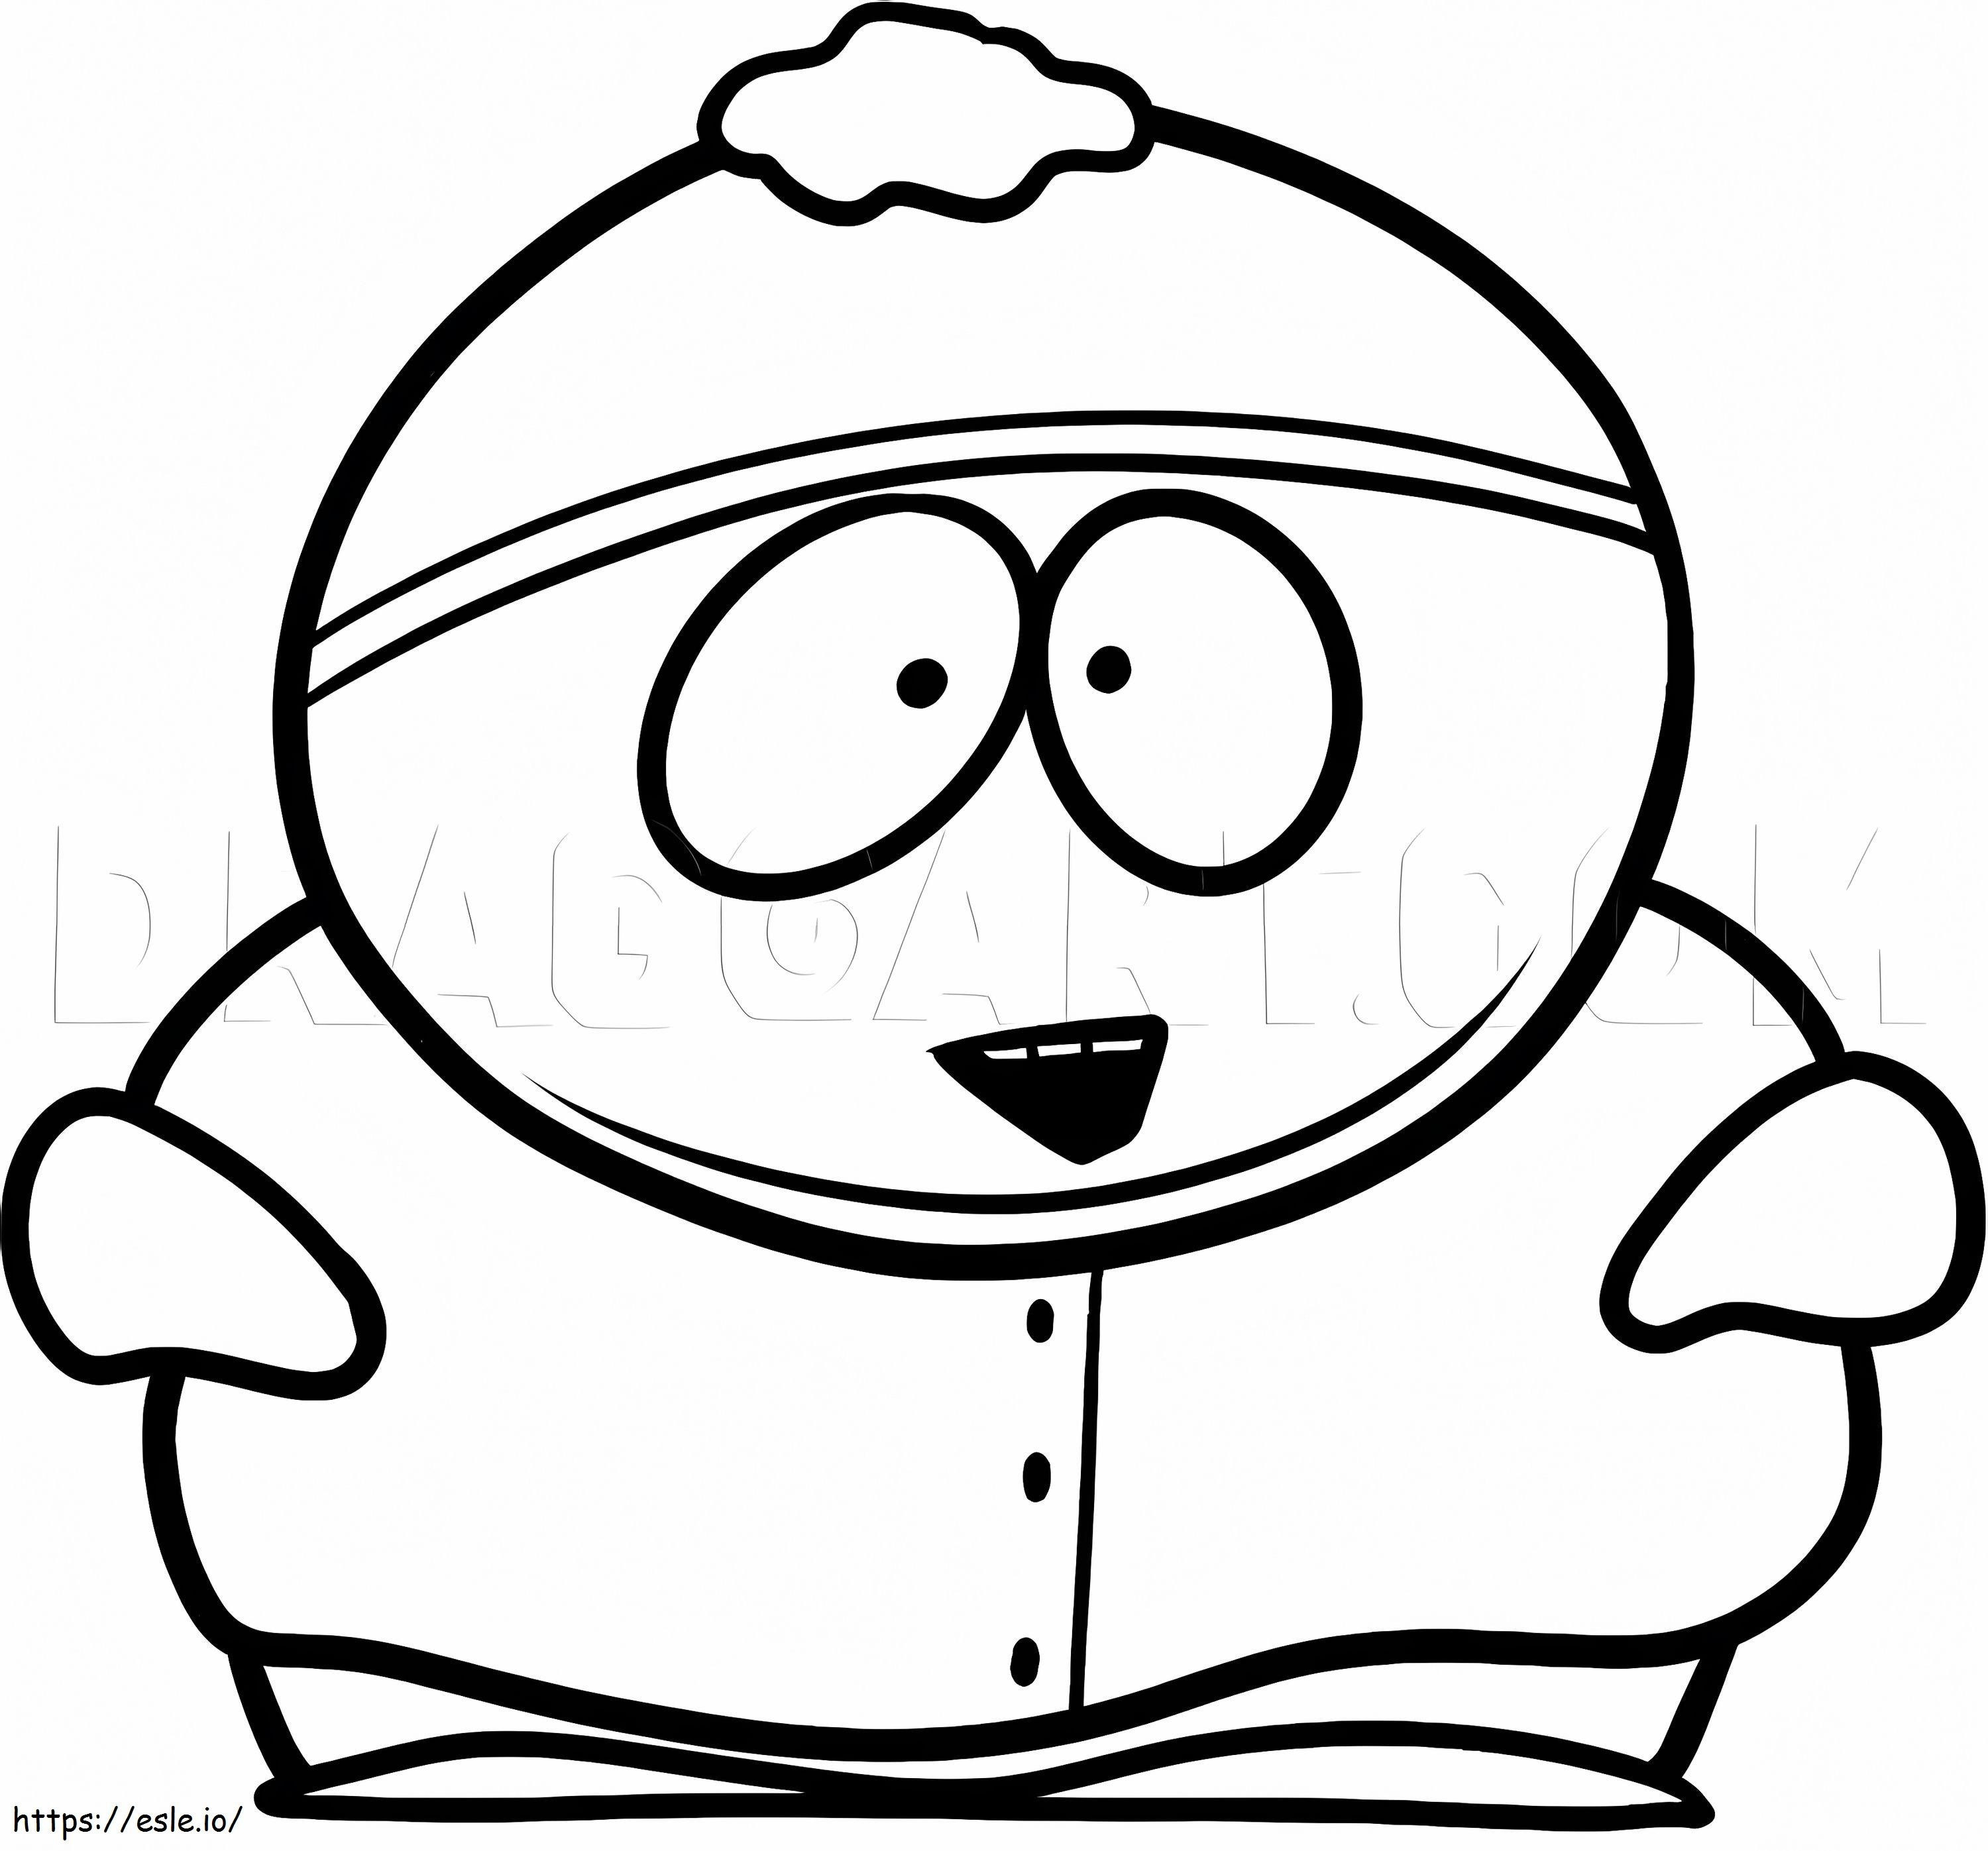 Smiling Eric Cartman coloring page